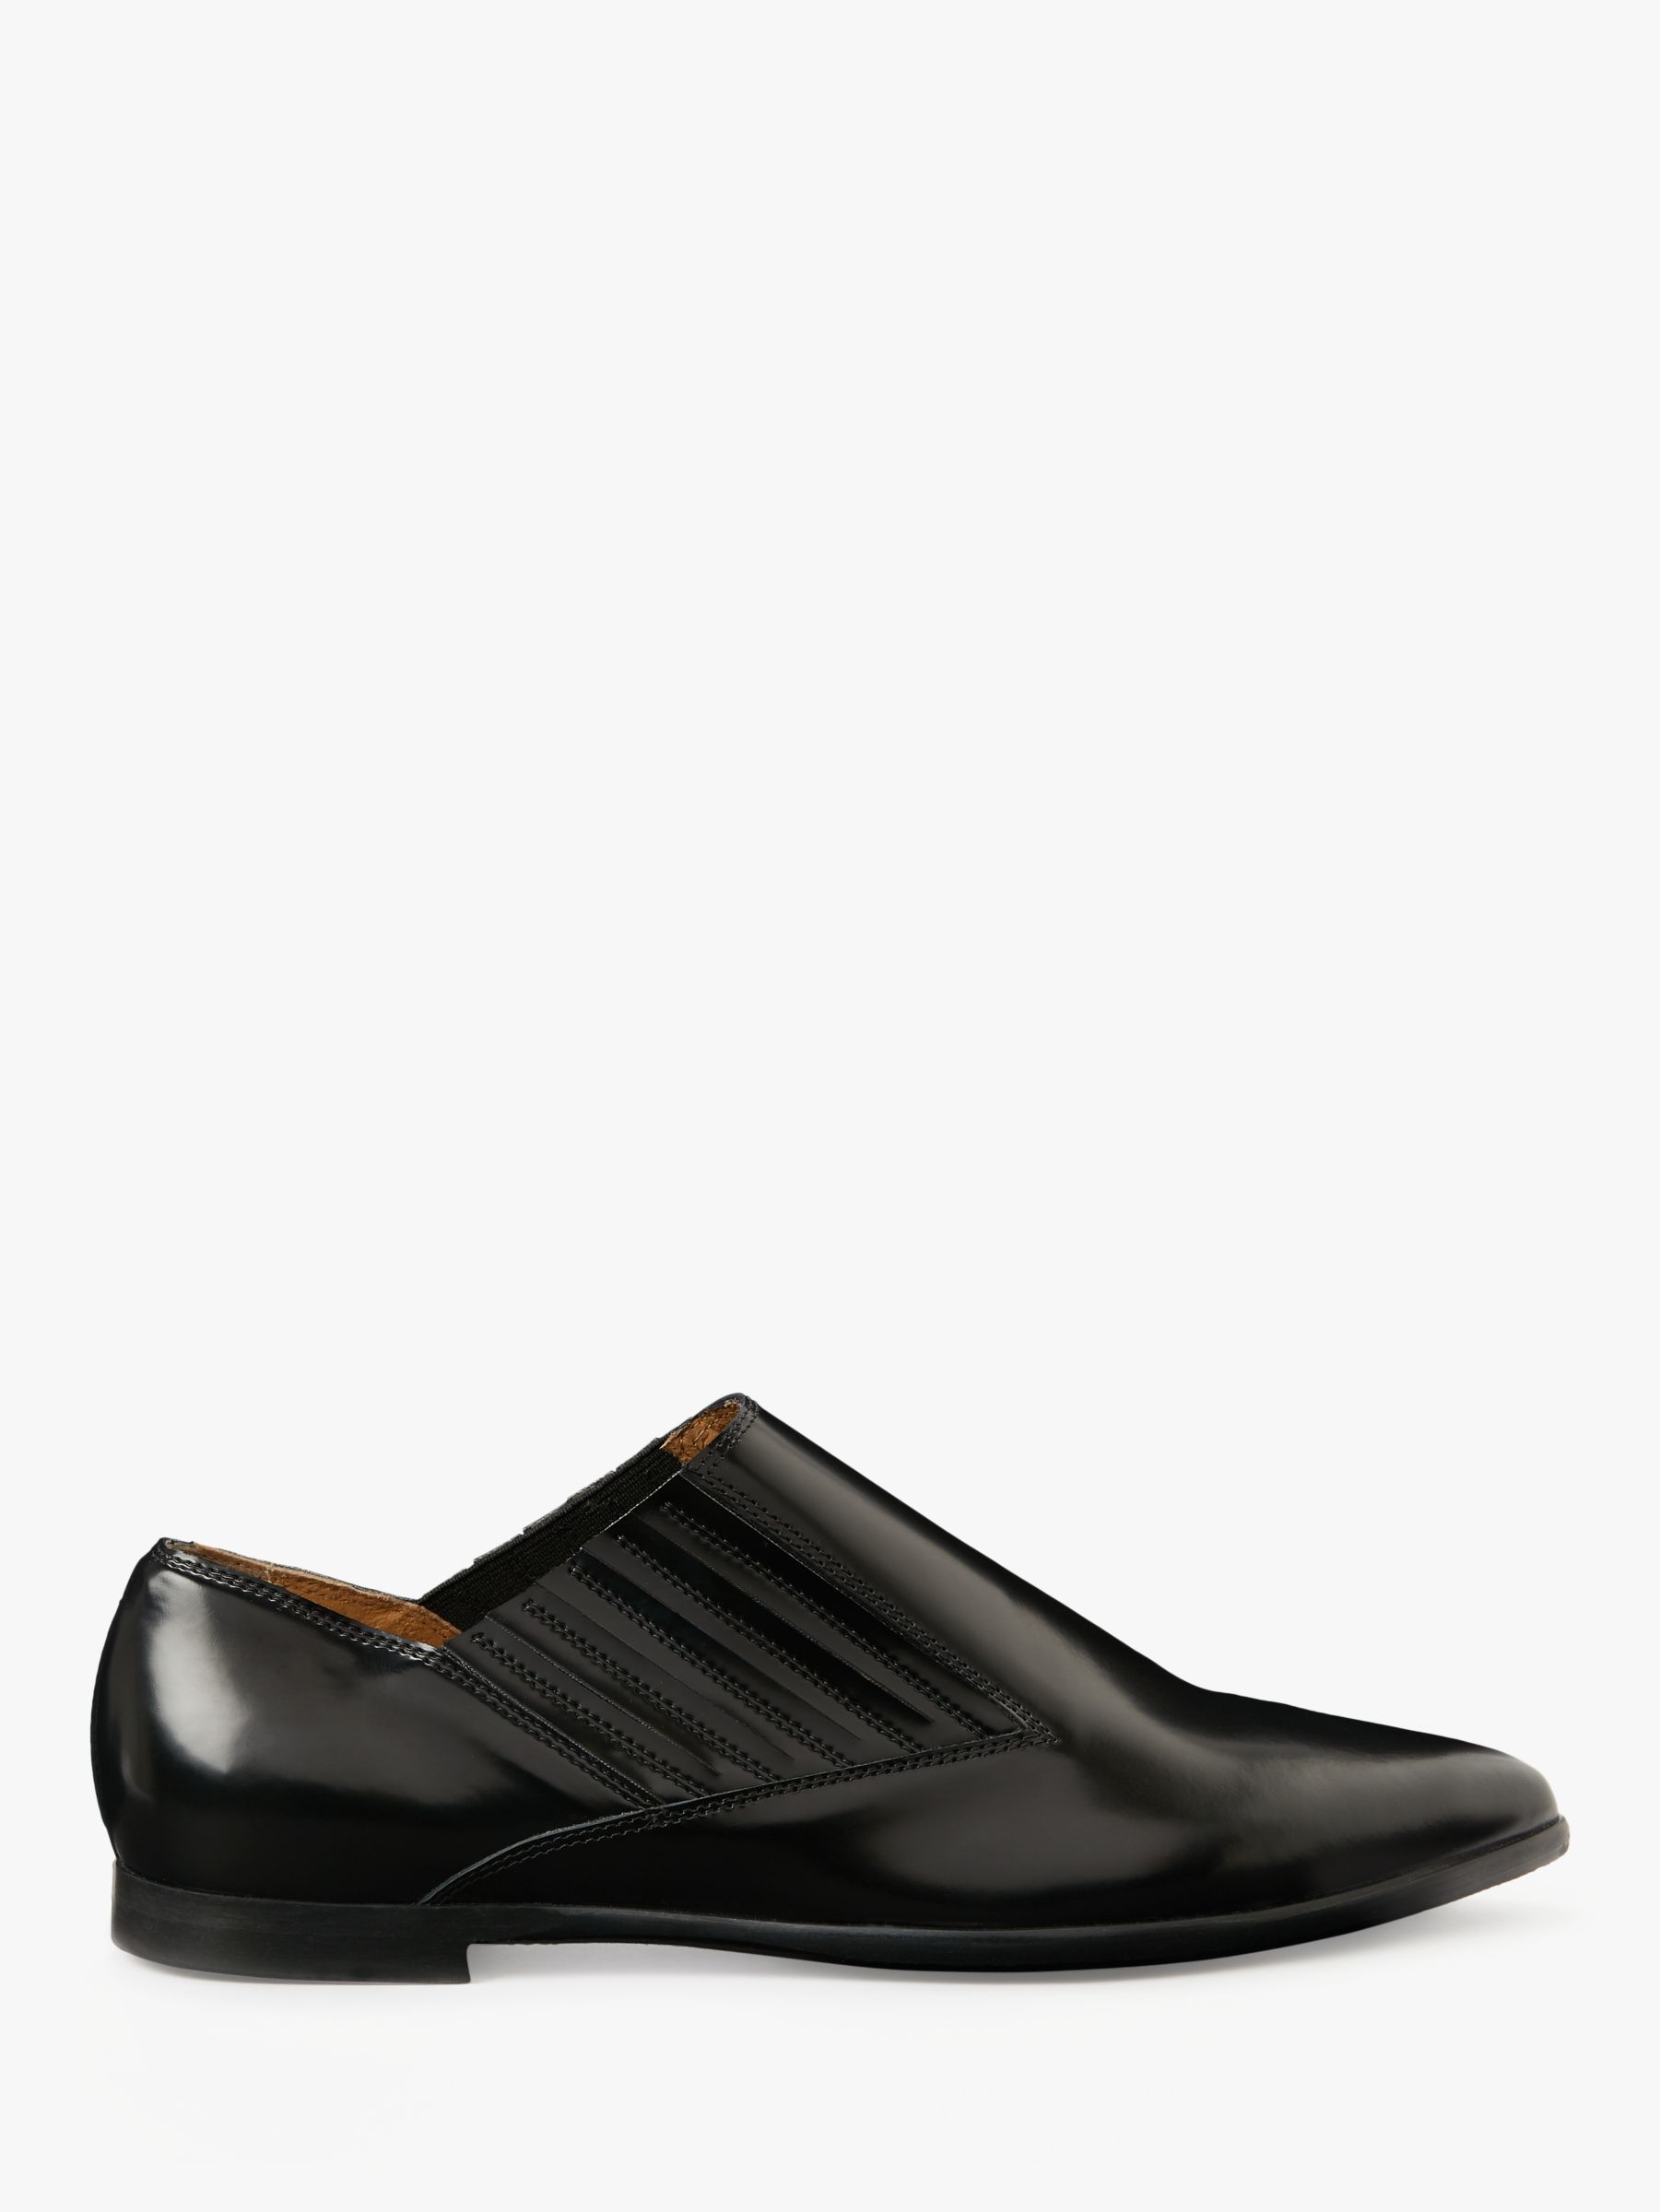 Kin Eliska Flat Shoe Boots, Black Leather